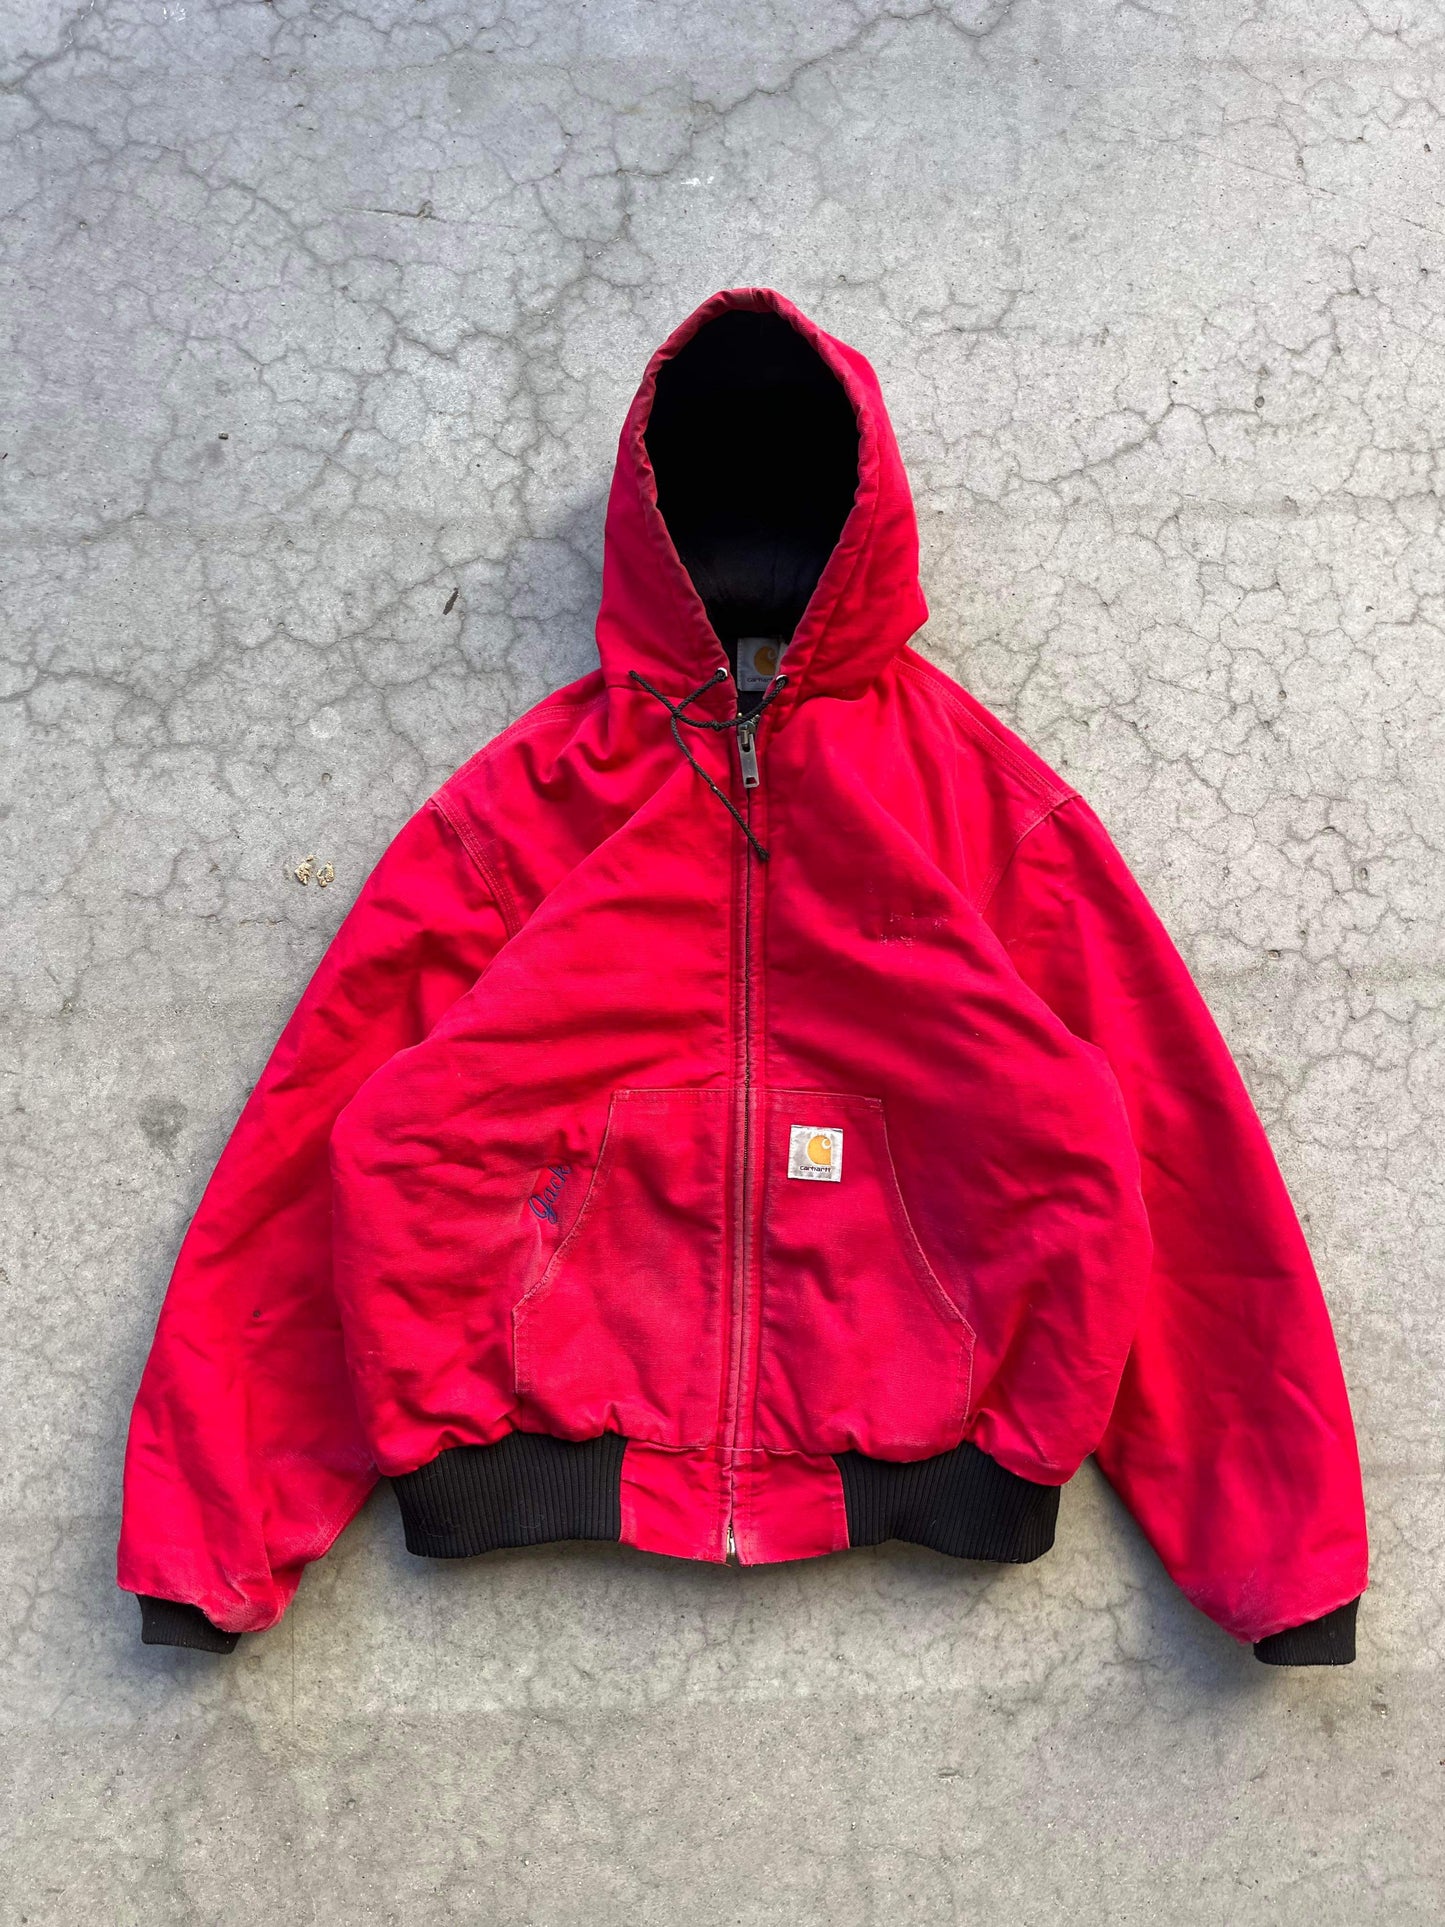 (XL/2X) Red Carhartt Hooded Jacket